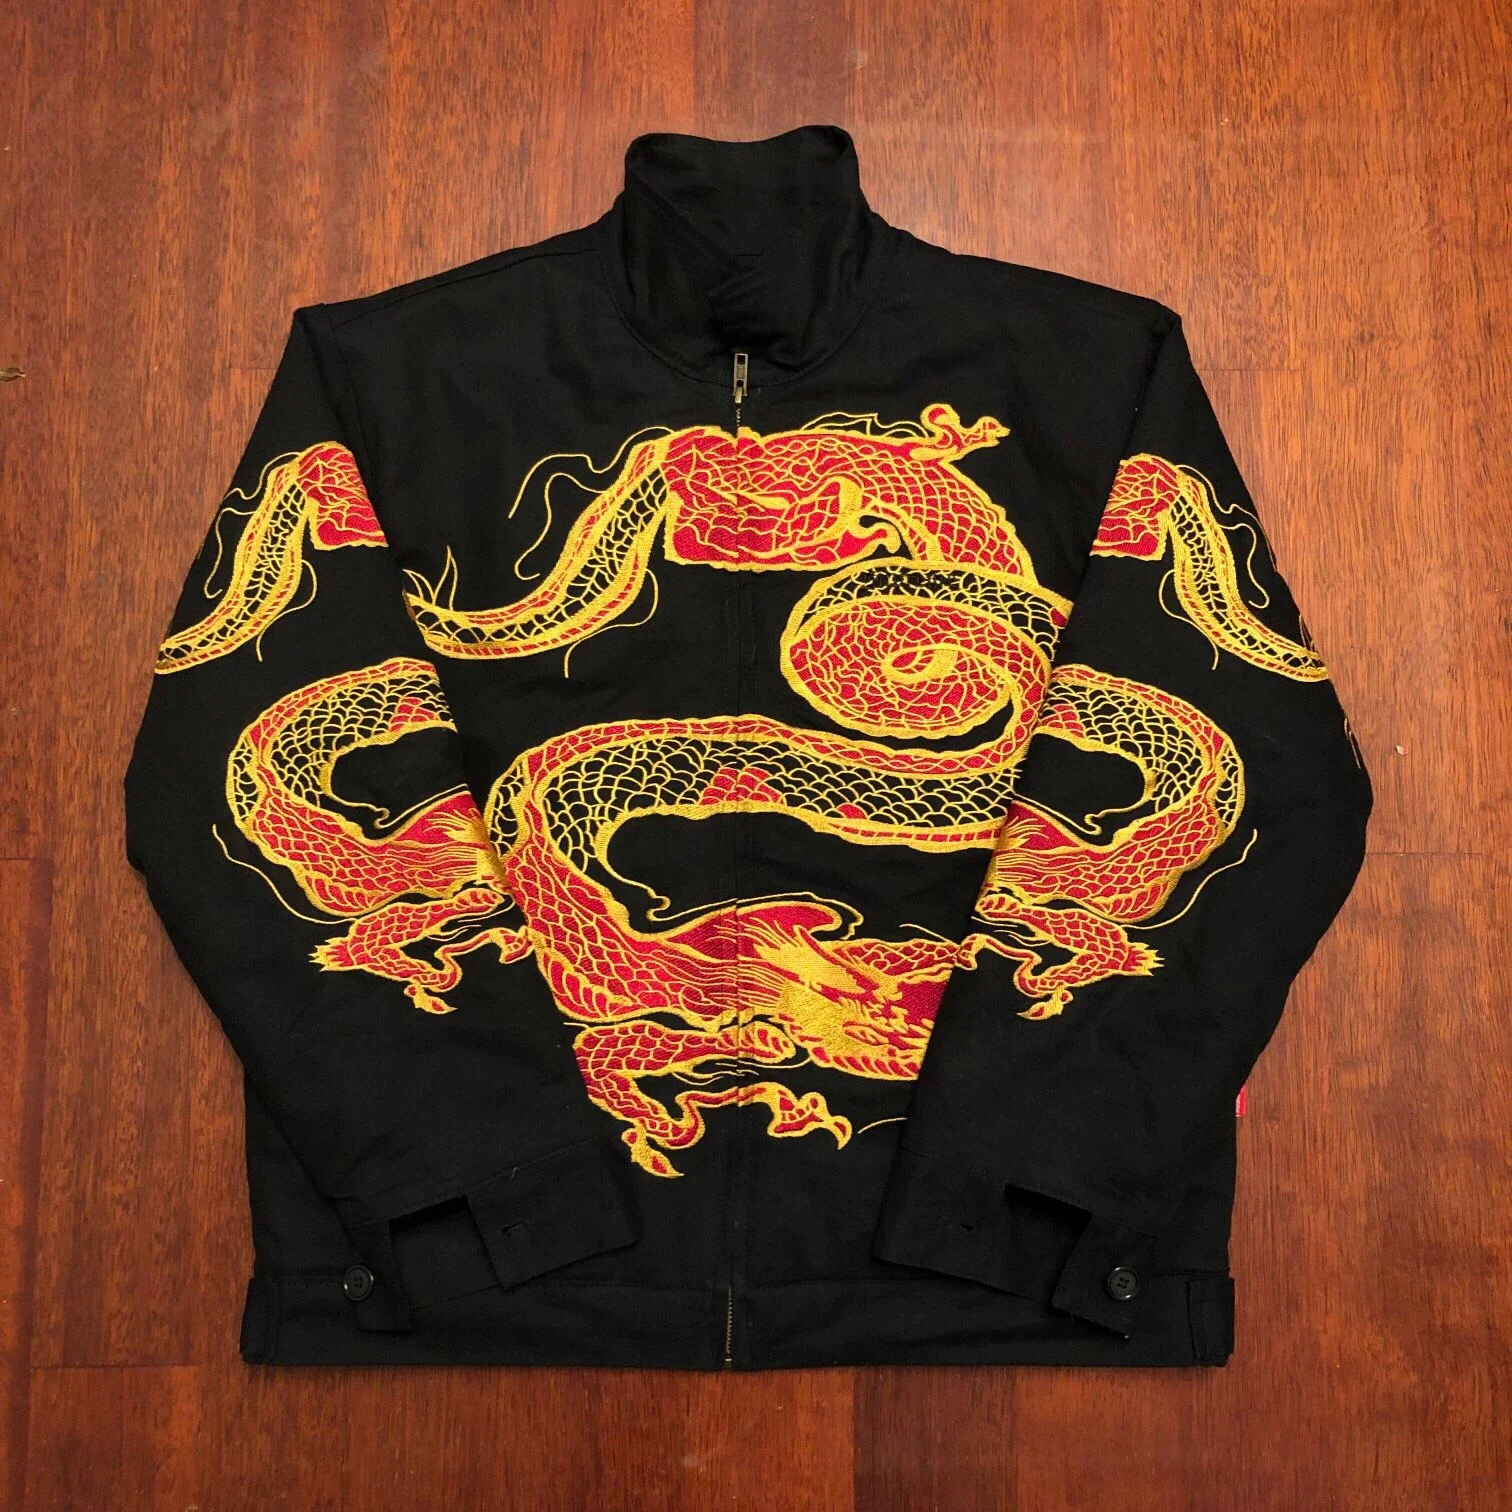 Supreme Dragon Work Jacket 中国龙龙袍刺绣棉衣夹克外套